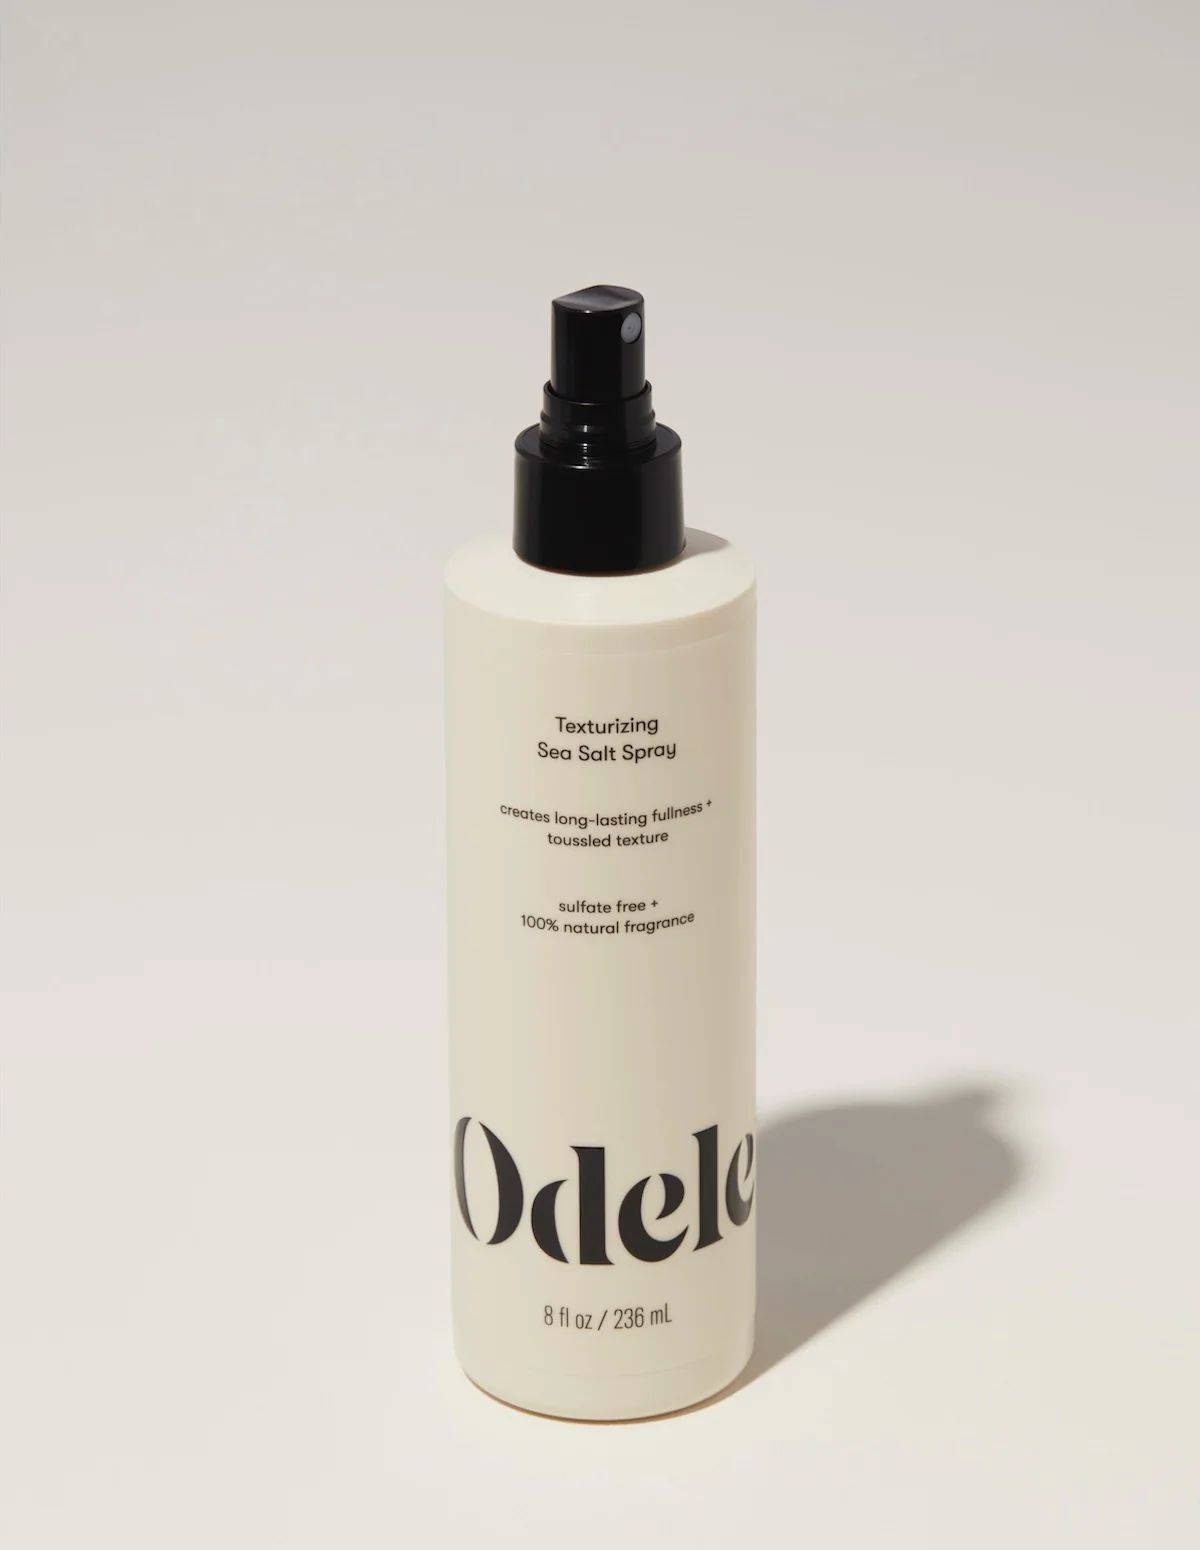 Texturizing Sea Salt Spray | Odele Beauty